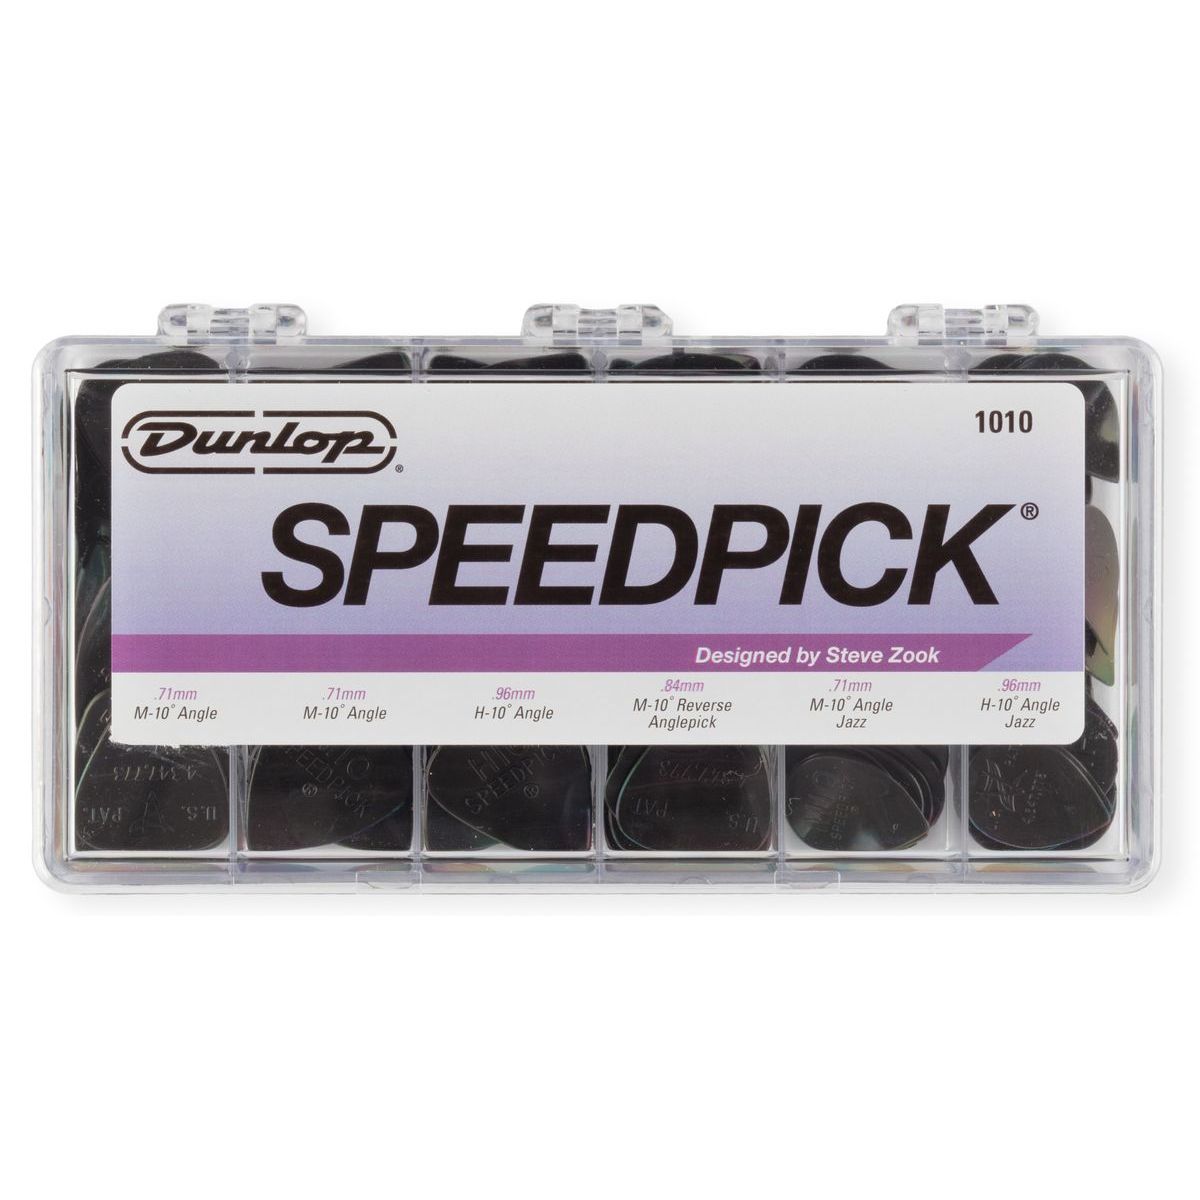 Медиаторы Dunlop 1010 Speedpick Display (144 шт) медиаторы dunlop 4330 ultex sharp display 216 шт